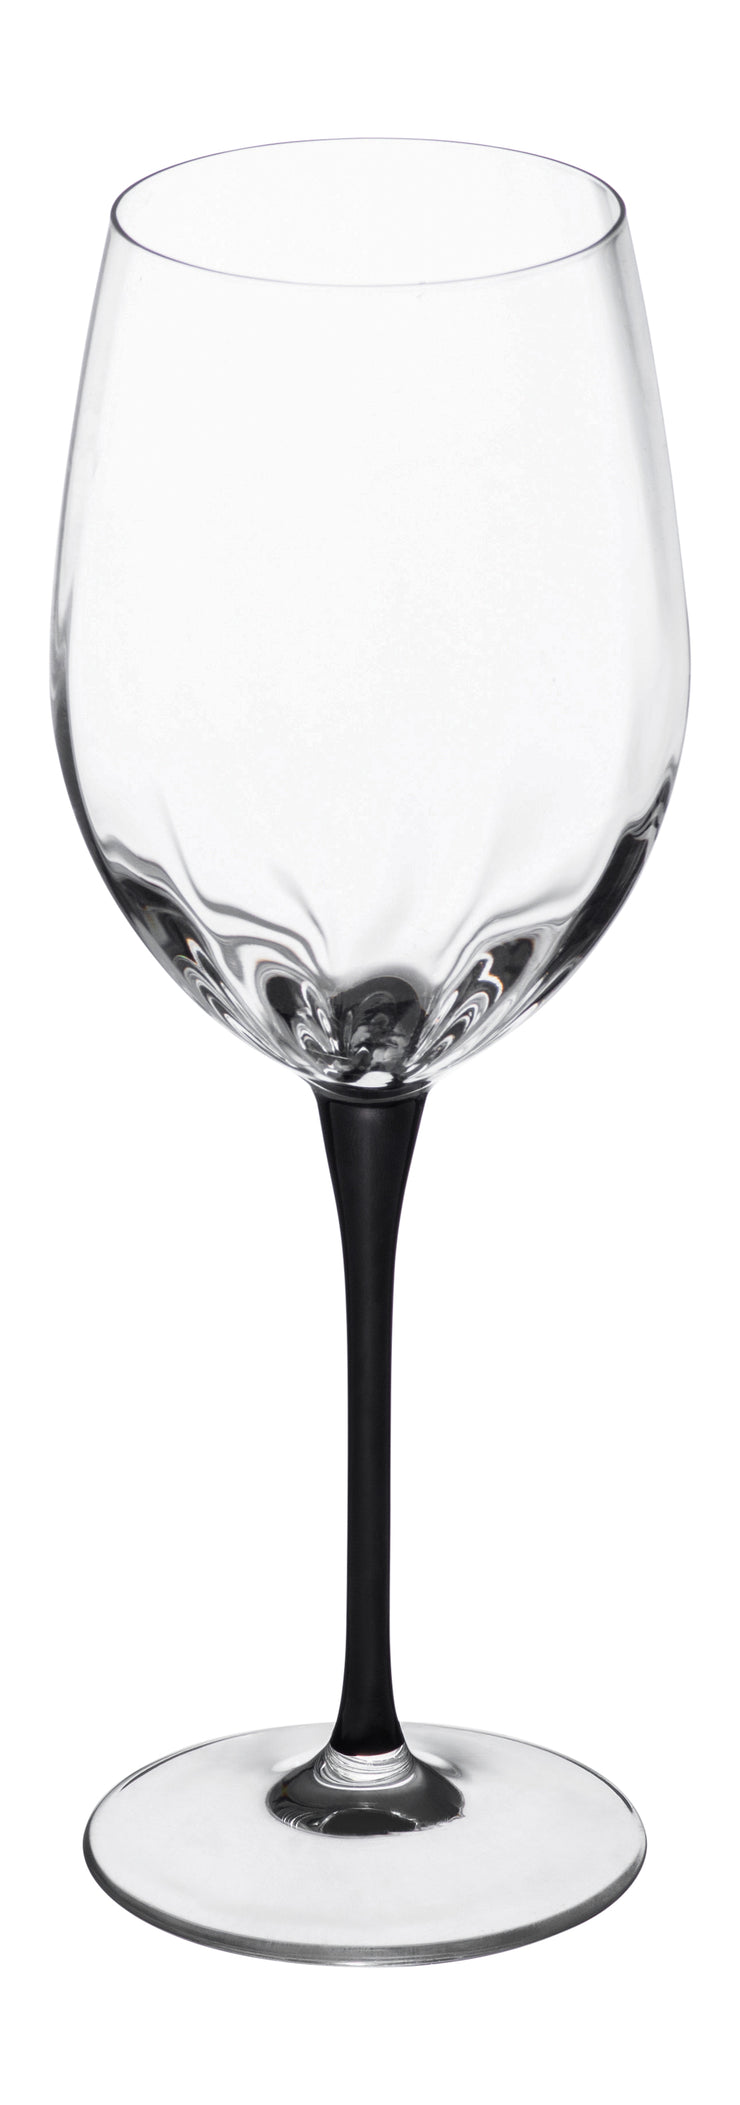 Spectrum Red Wine Glass with Black Stem, 18 oz. Set of 6